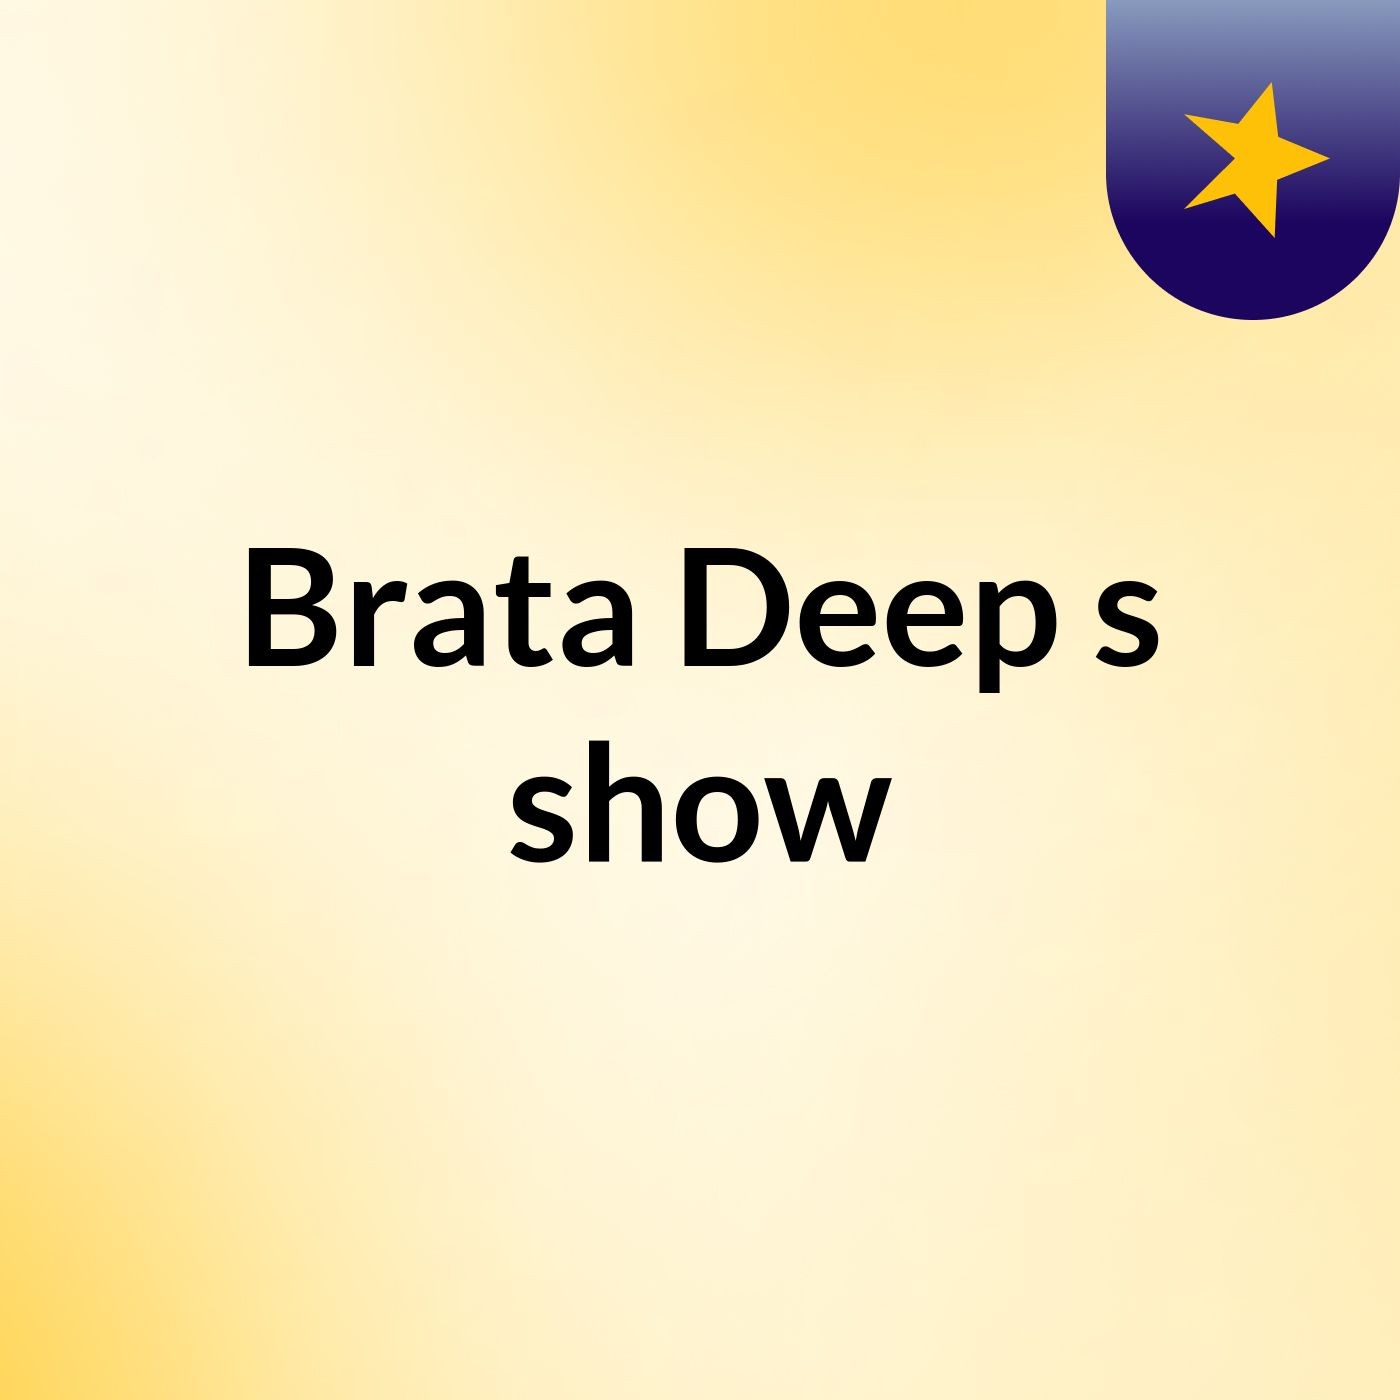 Brata Deep's show